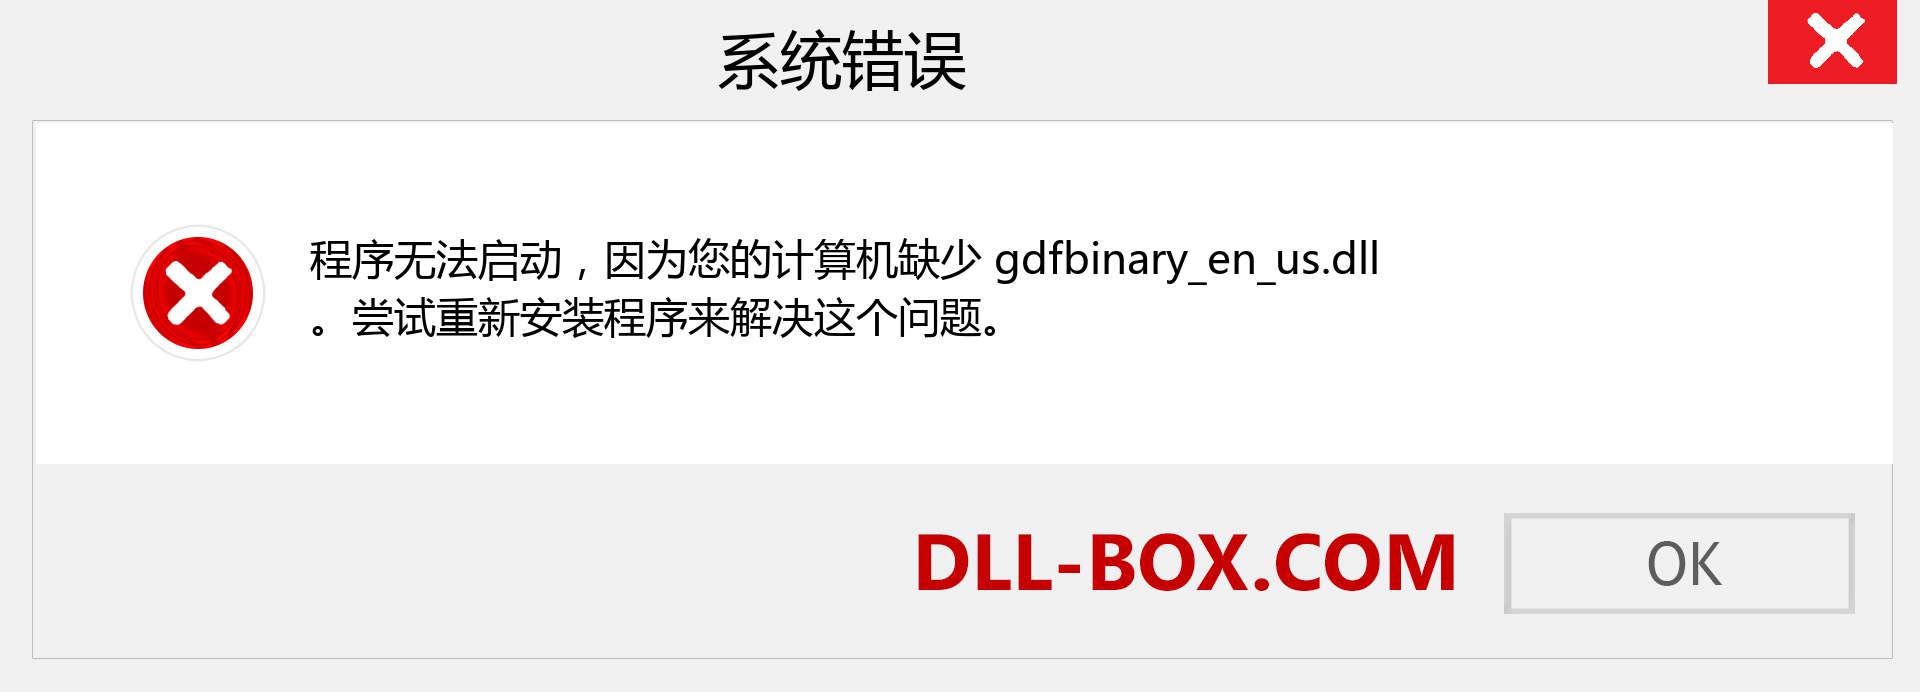 gdfbinary_en_us.dll 文件丢失？。 适用于 Windows 7、8、10 的下载 - 修复 Windows、照片、图像上的 gdfbinary_en_us dll 丢失错误